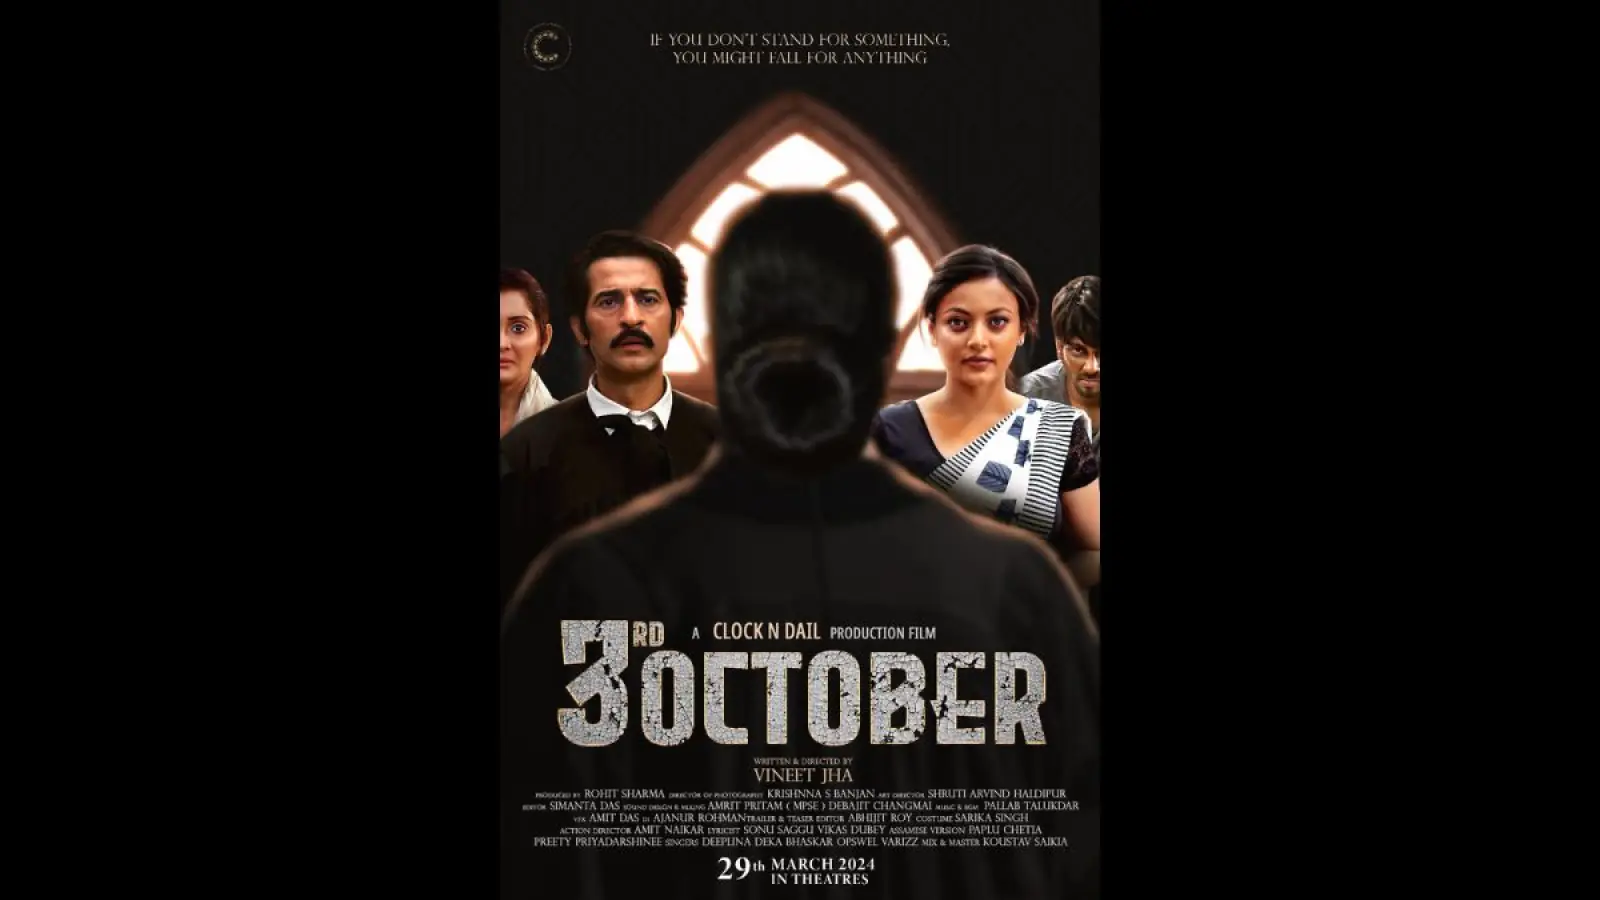 '3rd OCTOBER' फिल्म समाज को आइना दिखाने का काम करेगी